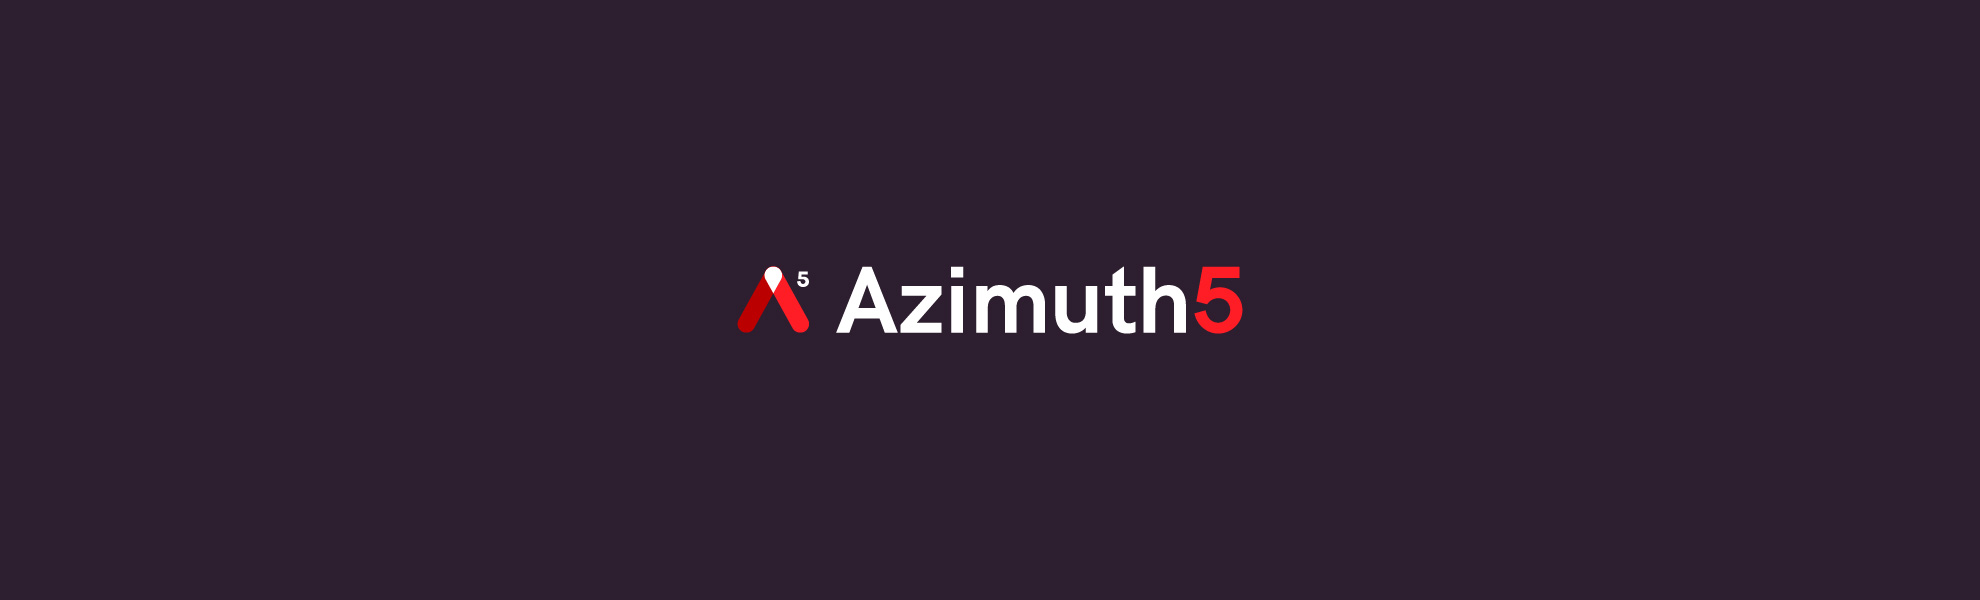 doublecat-azimuth5-logo-banner